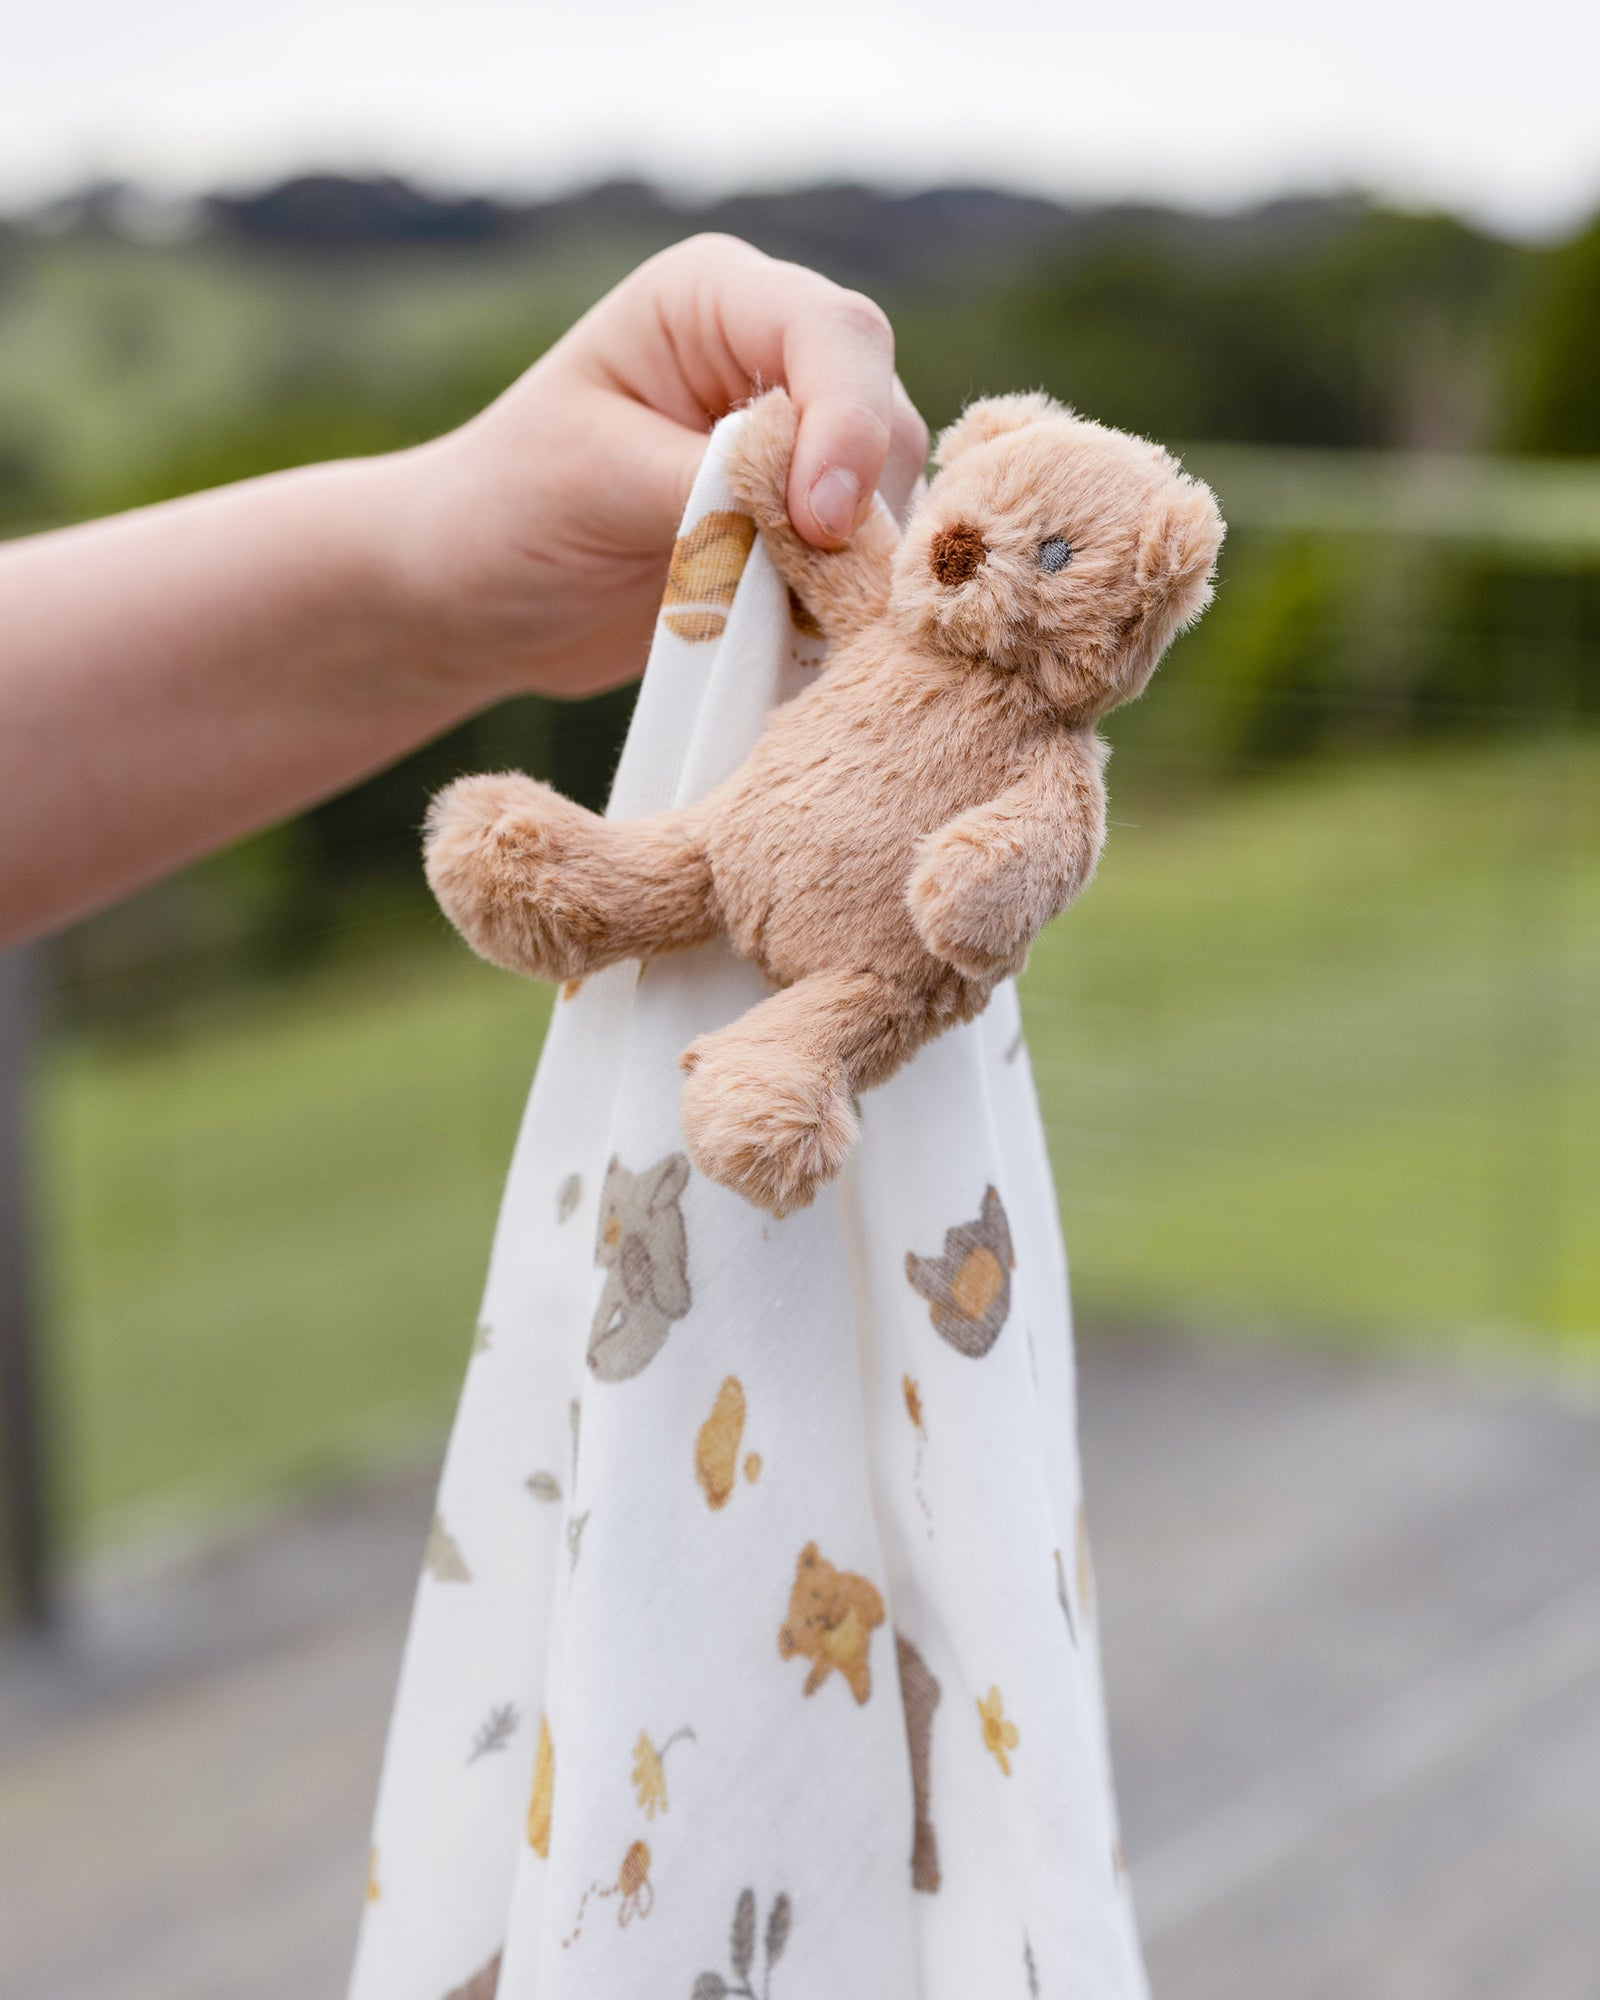 The Little Linen Company Soft Plush Toy & Baby Muslin Wrap - Nectar Bear